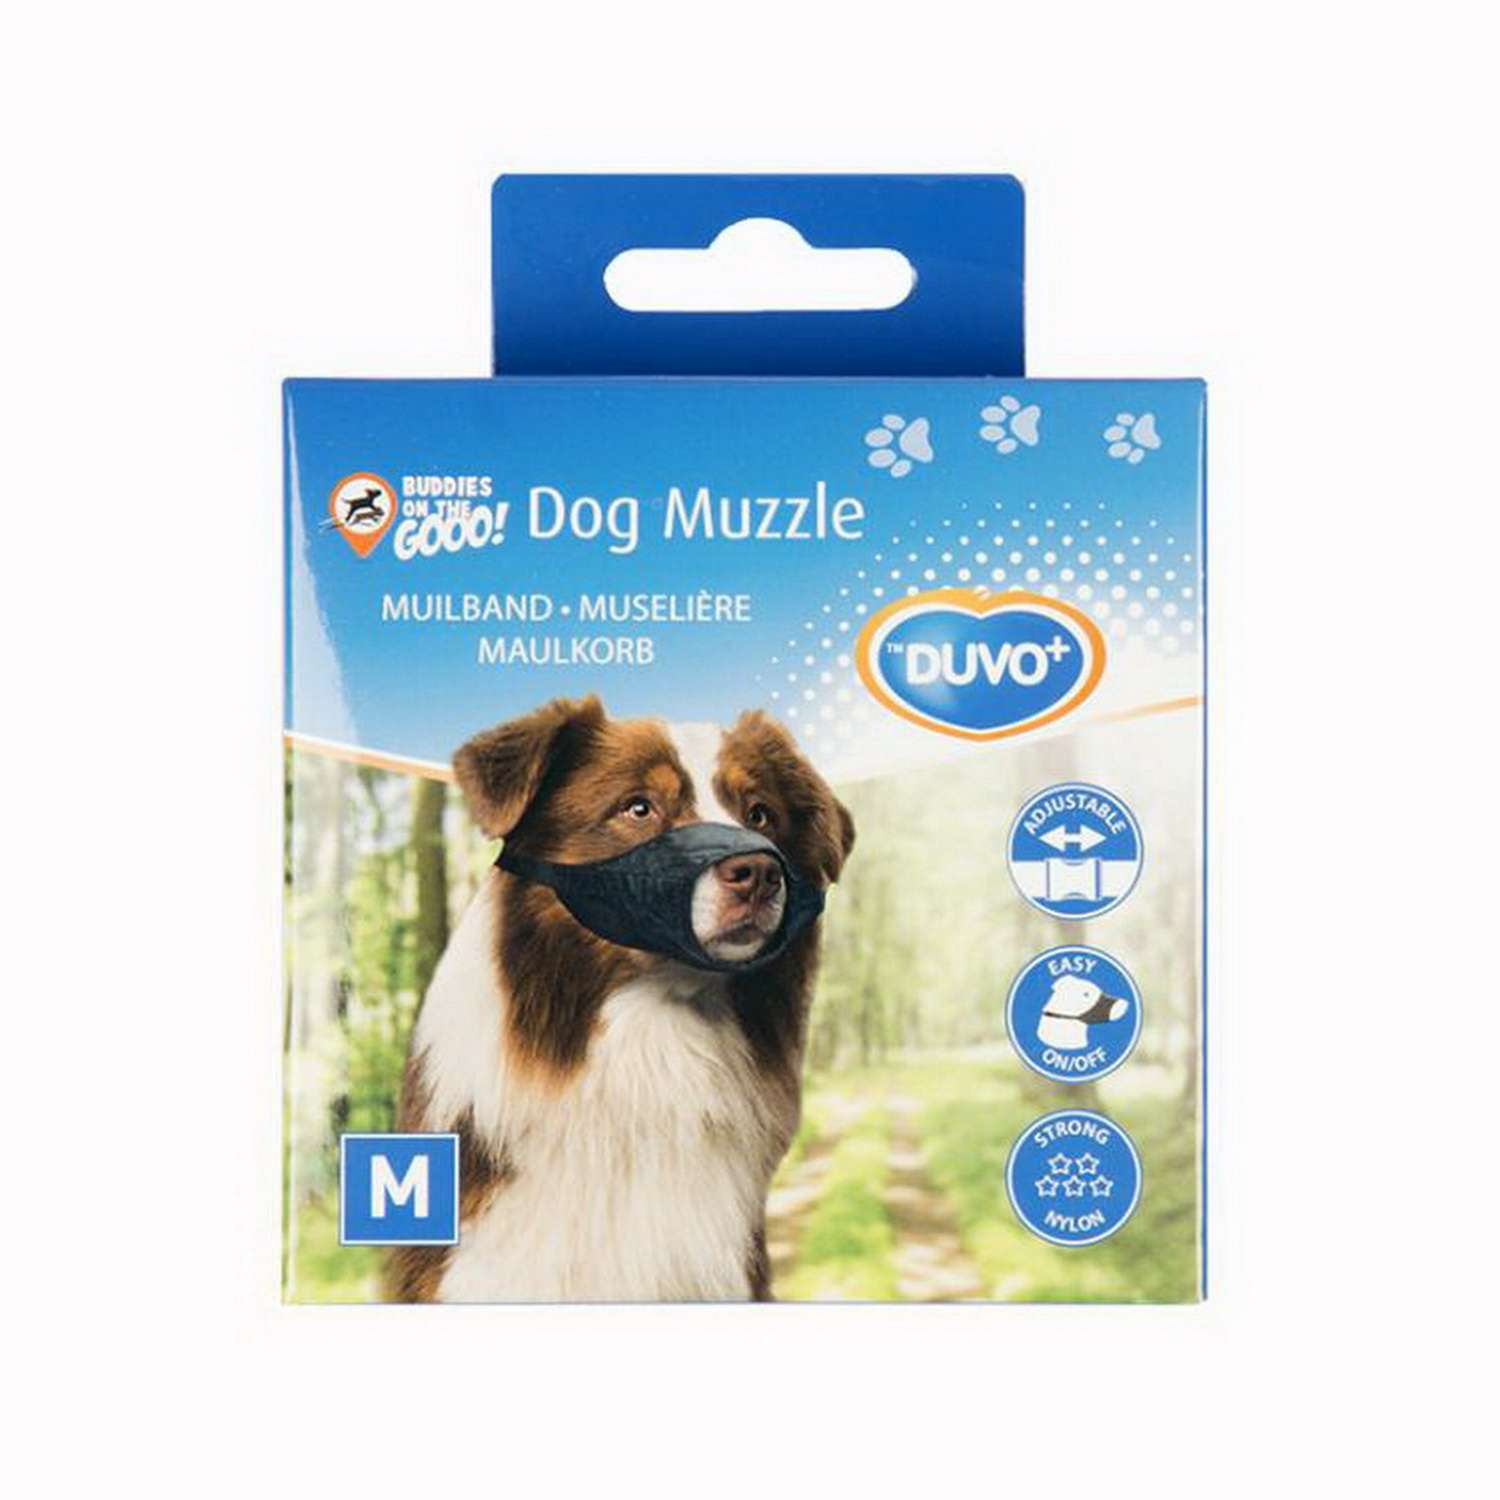 Намордник для собак DUVO+ Dog Muzzle - фото 1